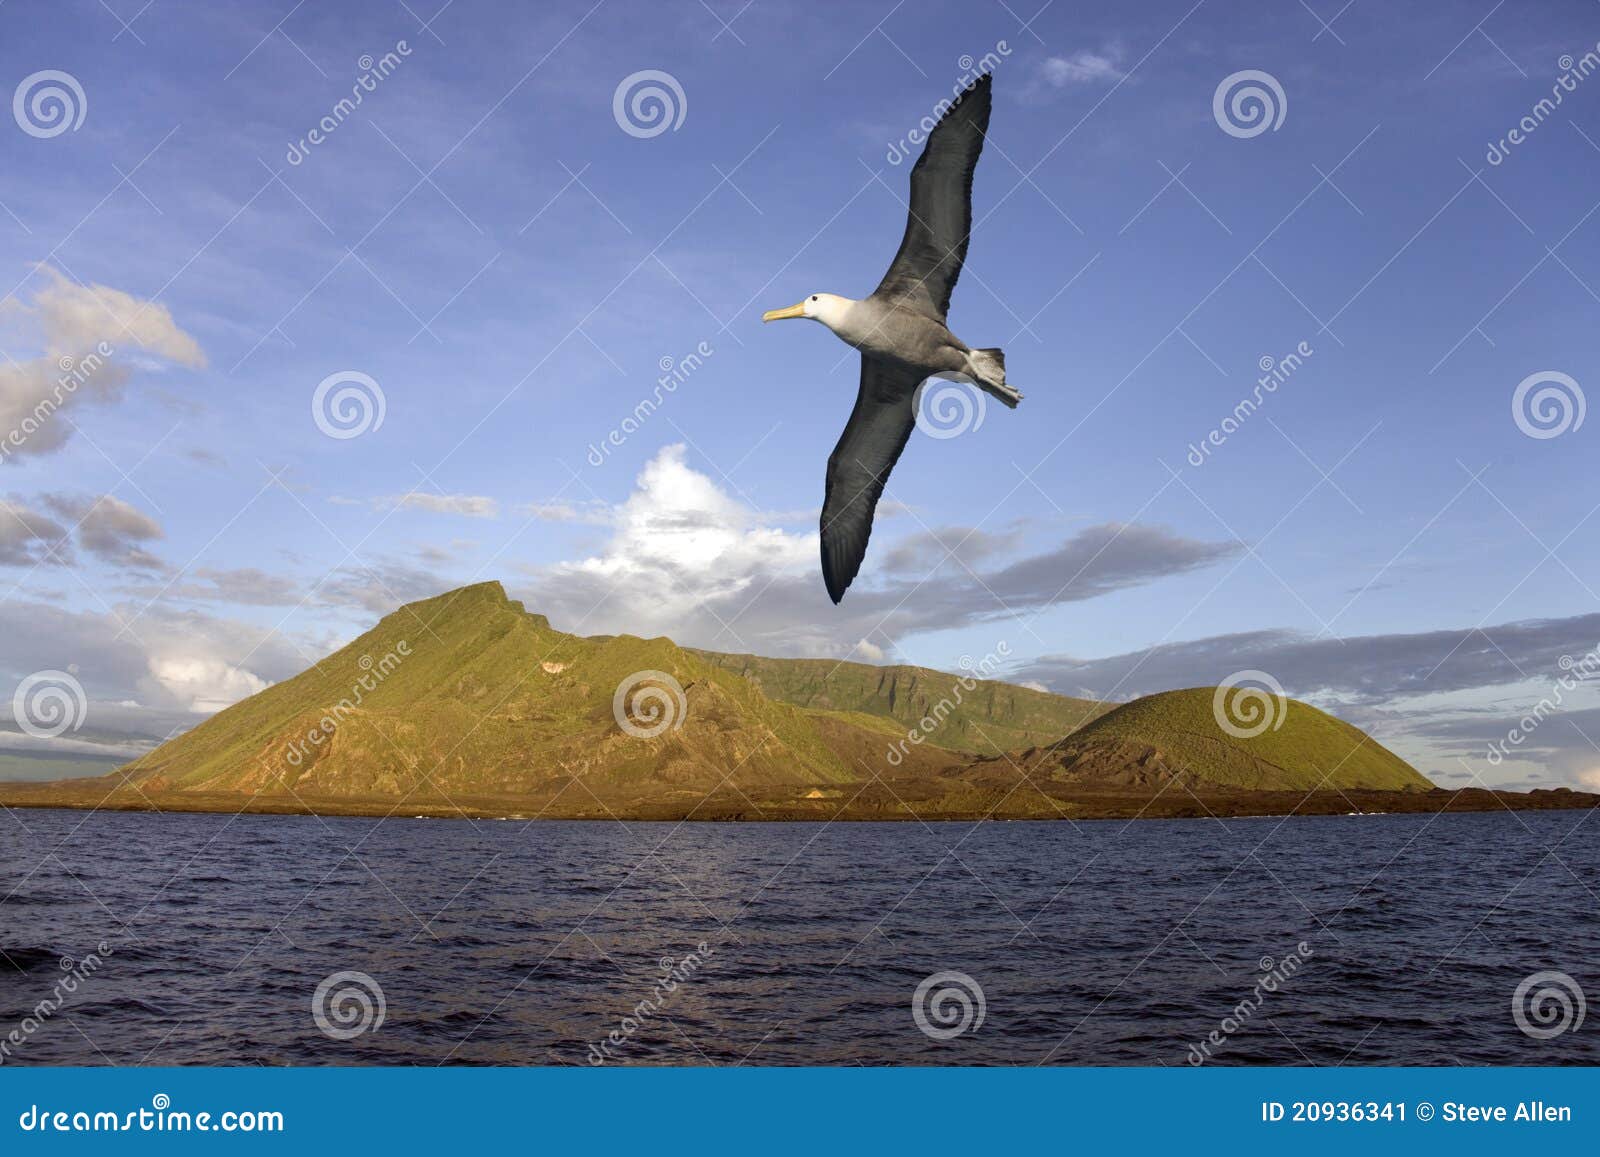 albatross - isabella island - galapagos islands